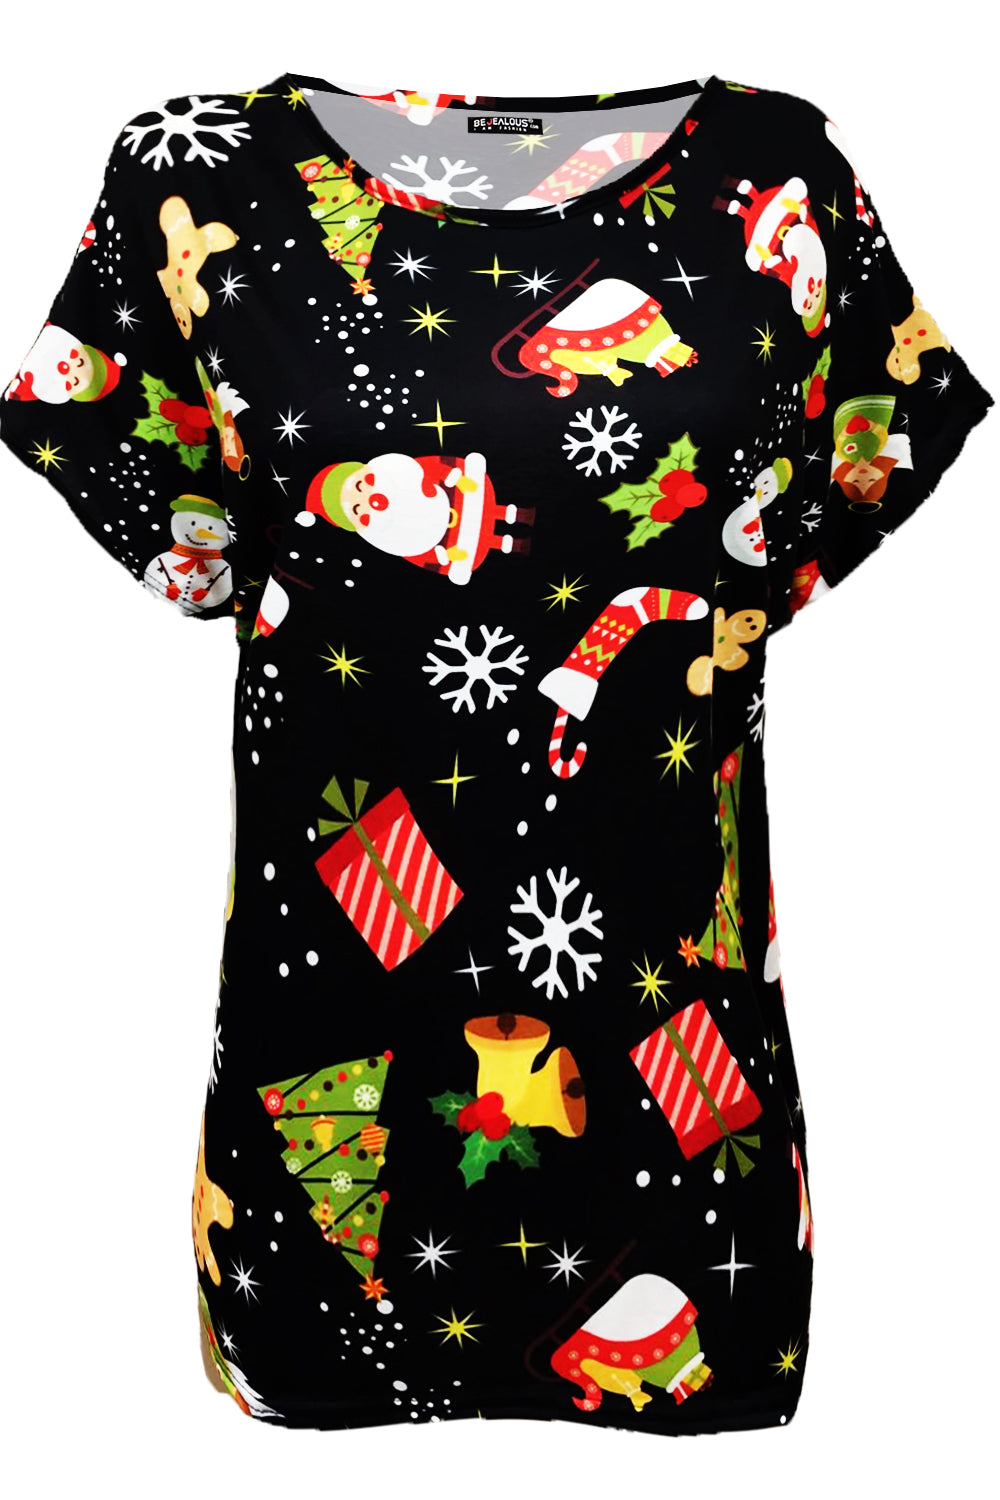 Mia Gift Tree Bells Christmas Baggy T Shirt